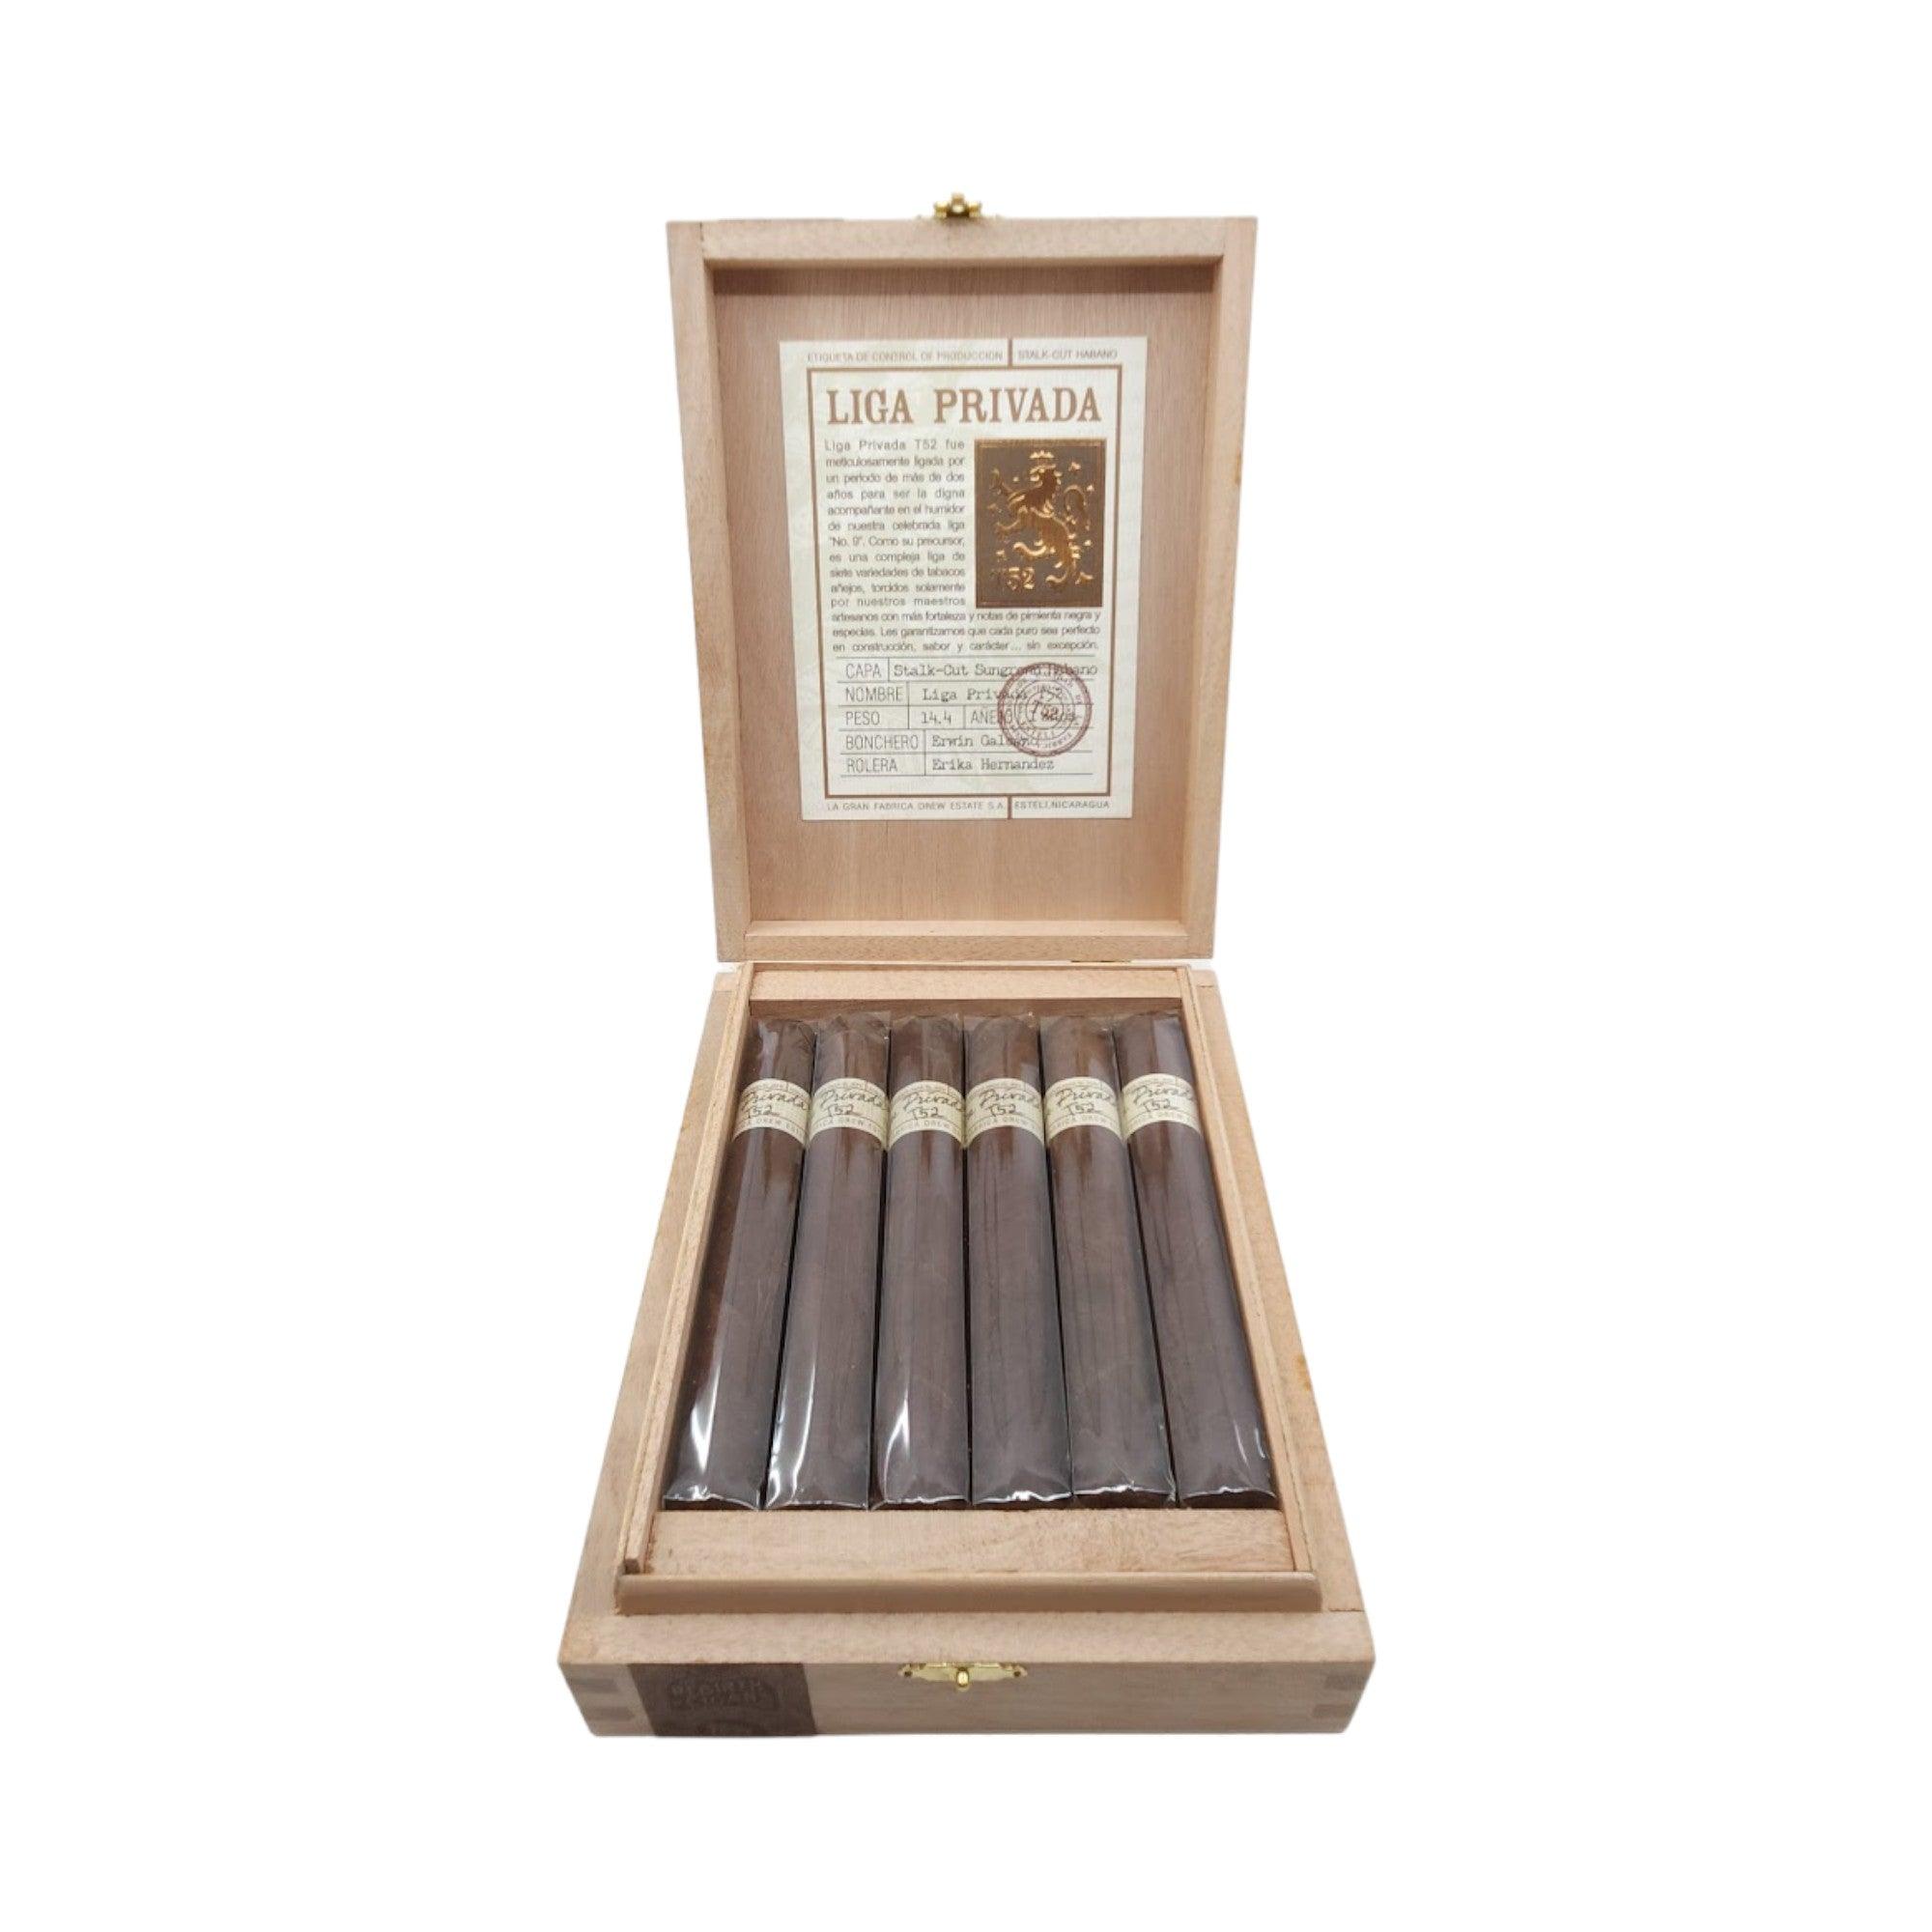 Drew Estate Cigar | Liga Privada T52 Toro | Box 12 - hk.cohcigars